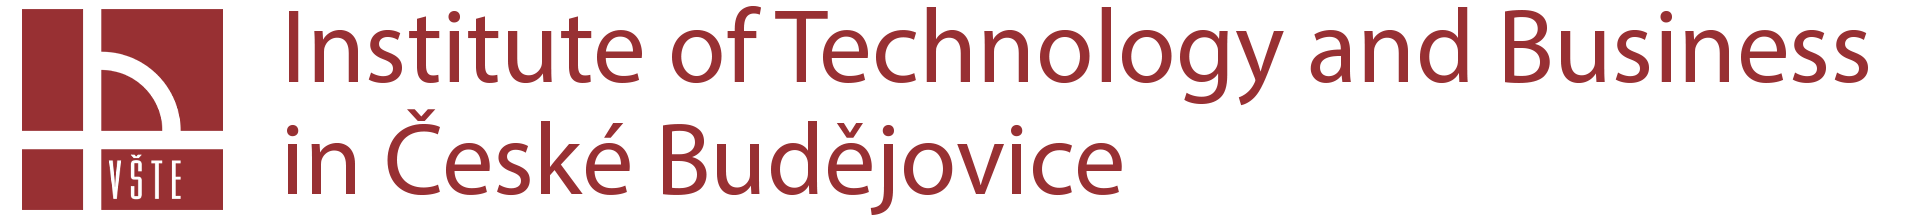 Institute of Technology and Business Ceske Budejovice Czech Republic